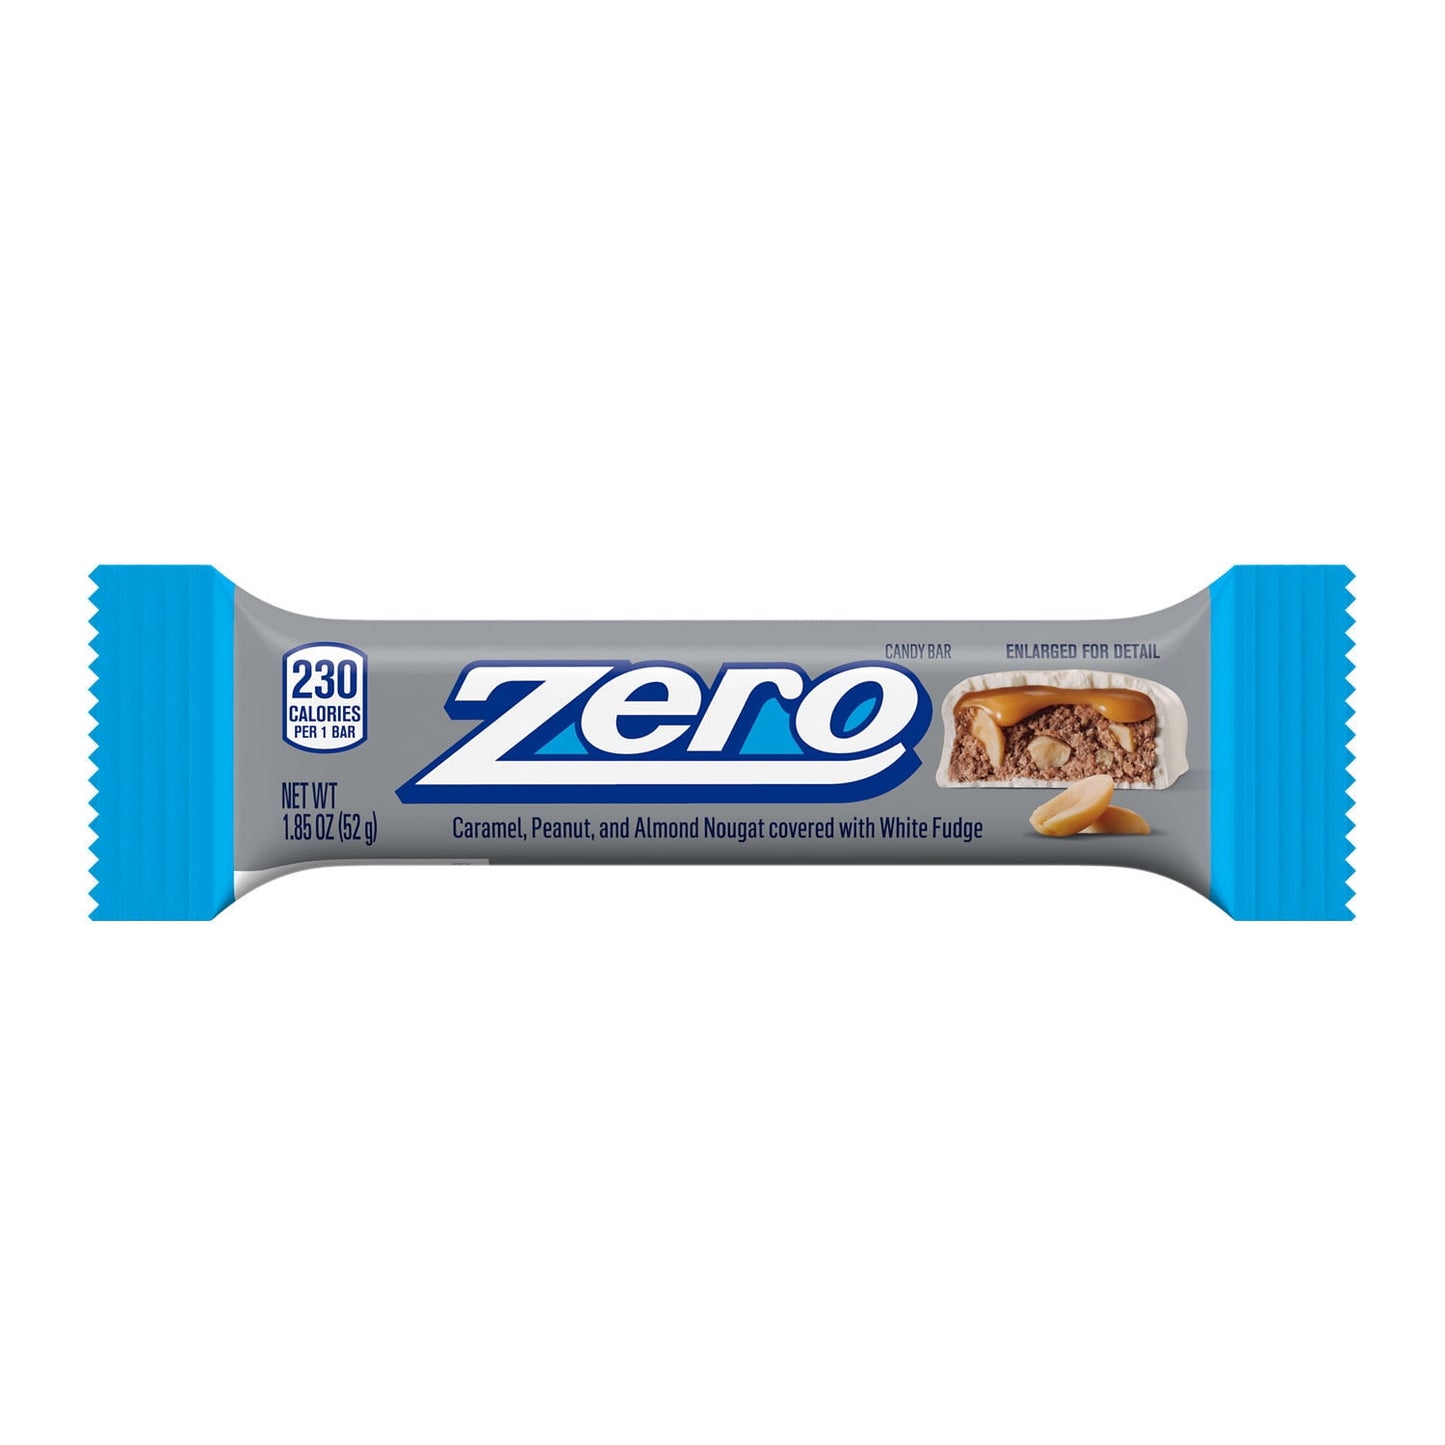 Zero White Fudge, Caramel, Peanut and Almond Nougat Candy, Bar 1.85 oz